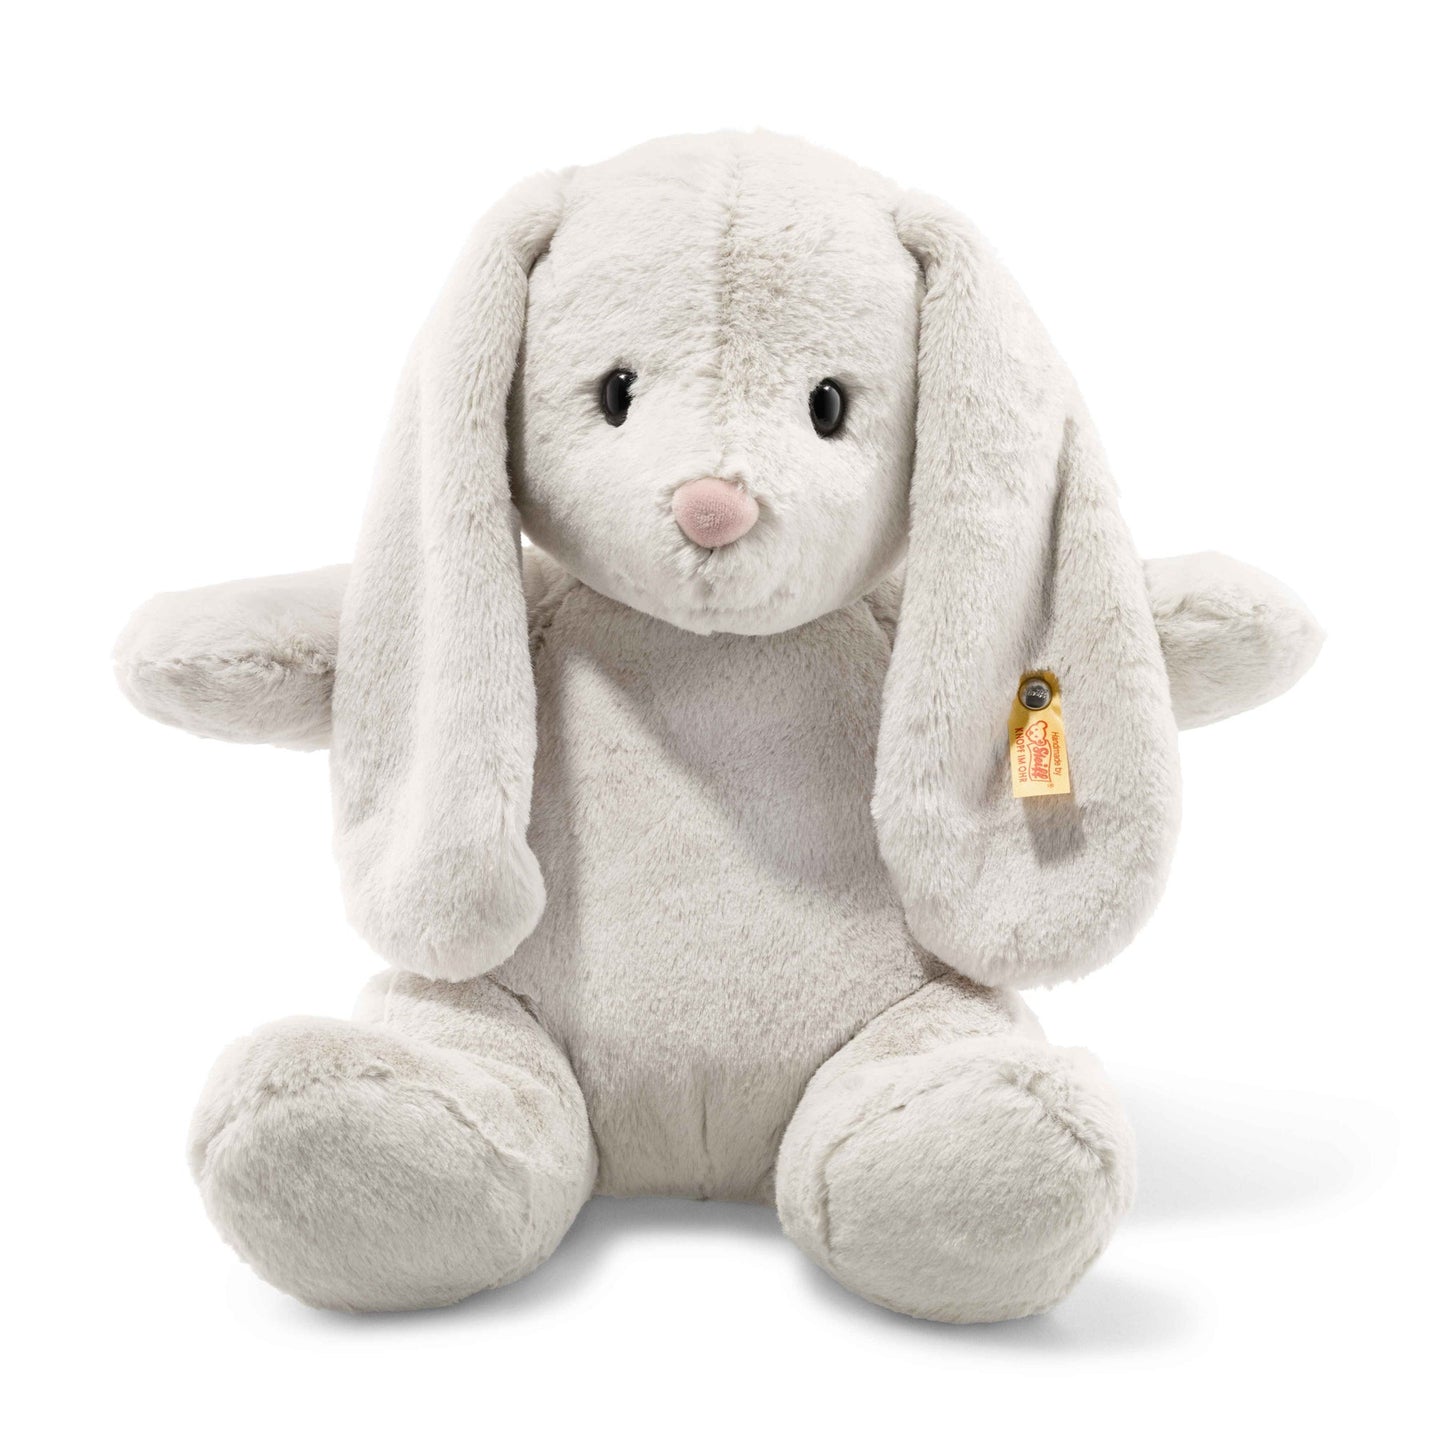 Steiff - Soft Cuddly Friends - Hoppie Rabbit Light Grey - Large 15